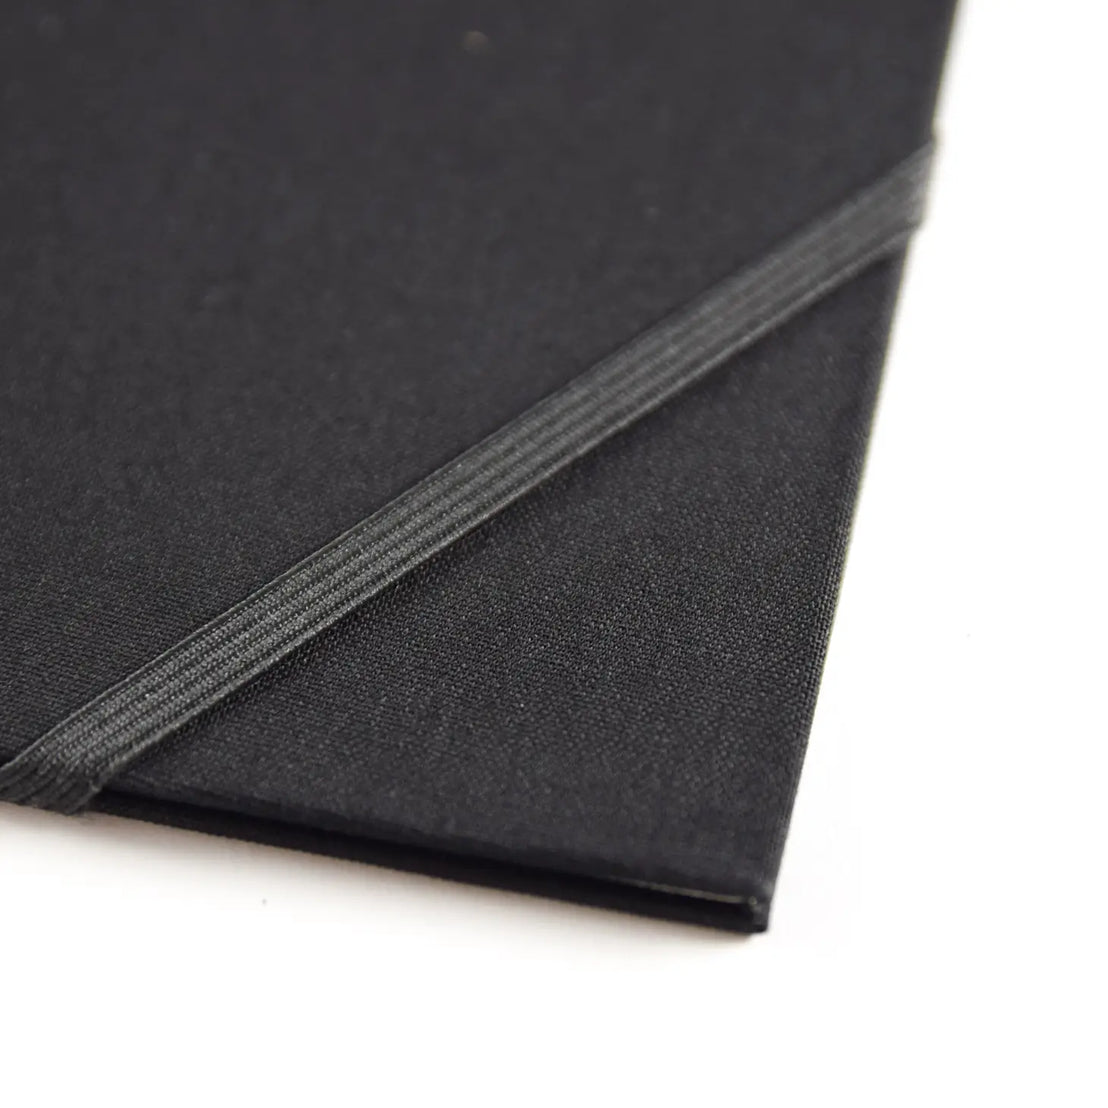 Hardcover Cloth-Bound Folder